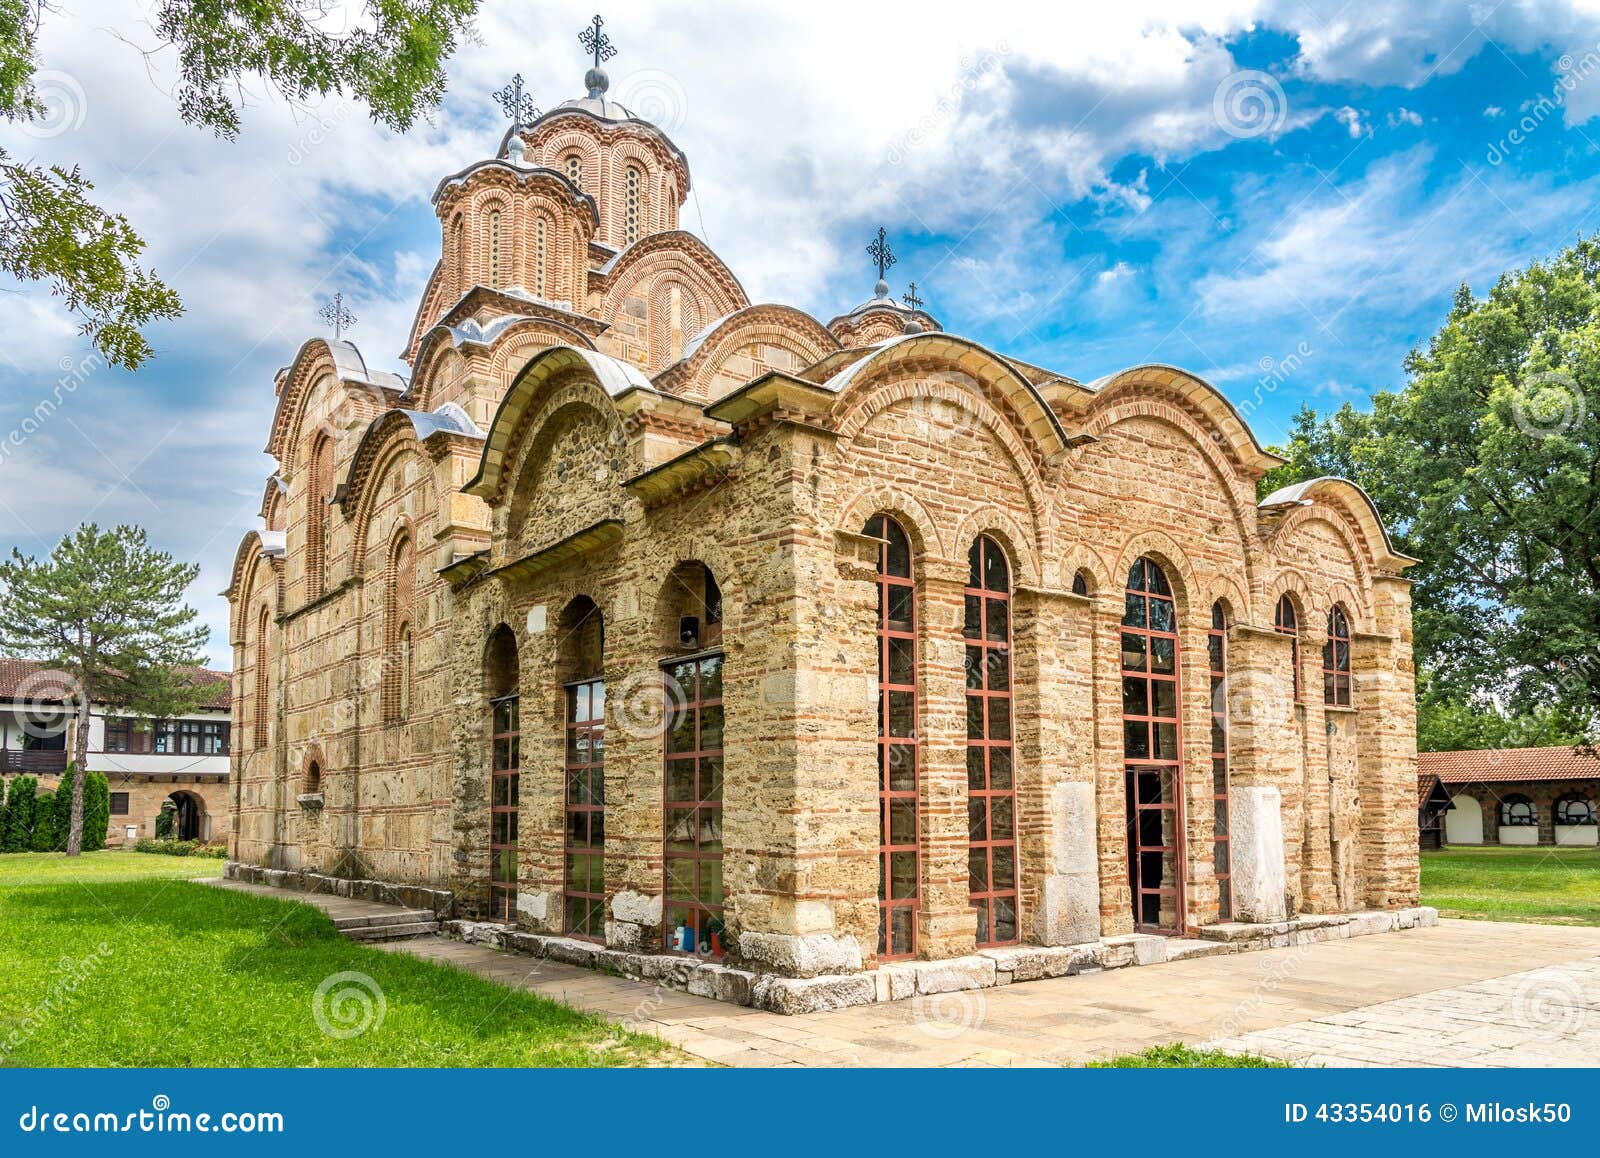 gracanica - serbian orthodox monastery